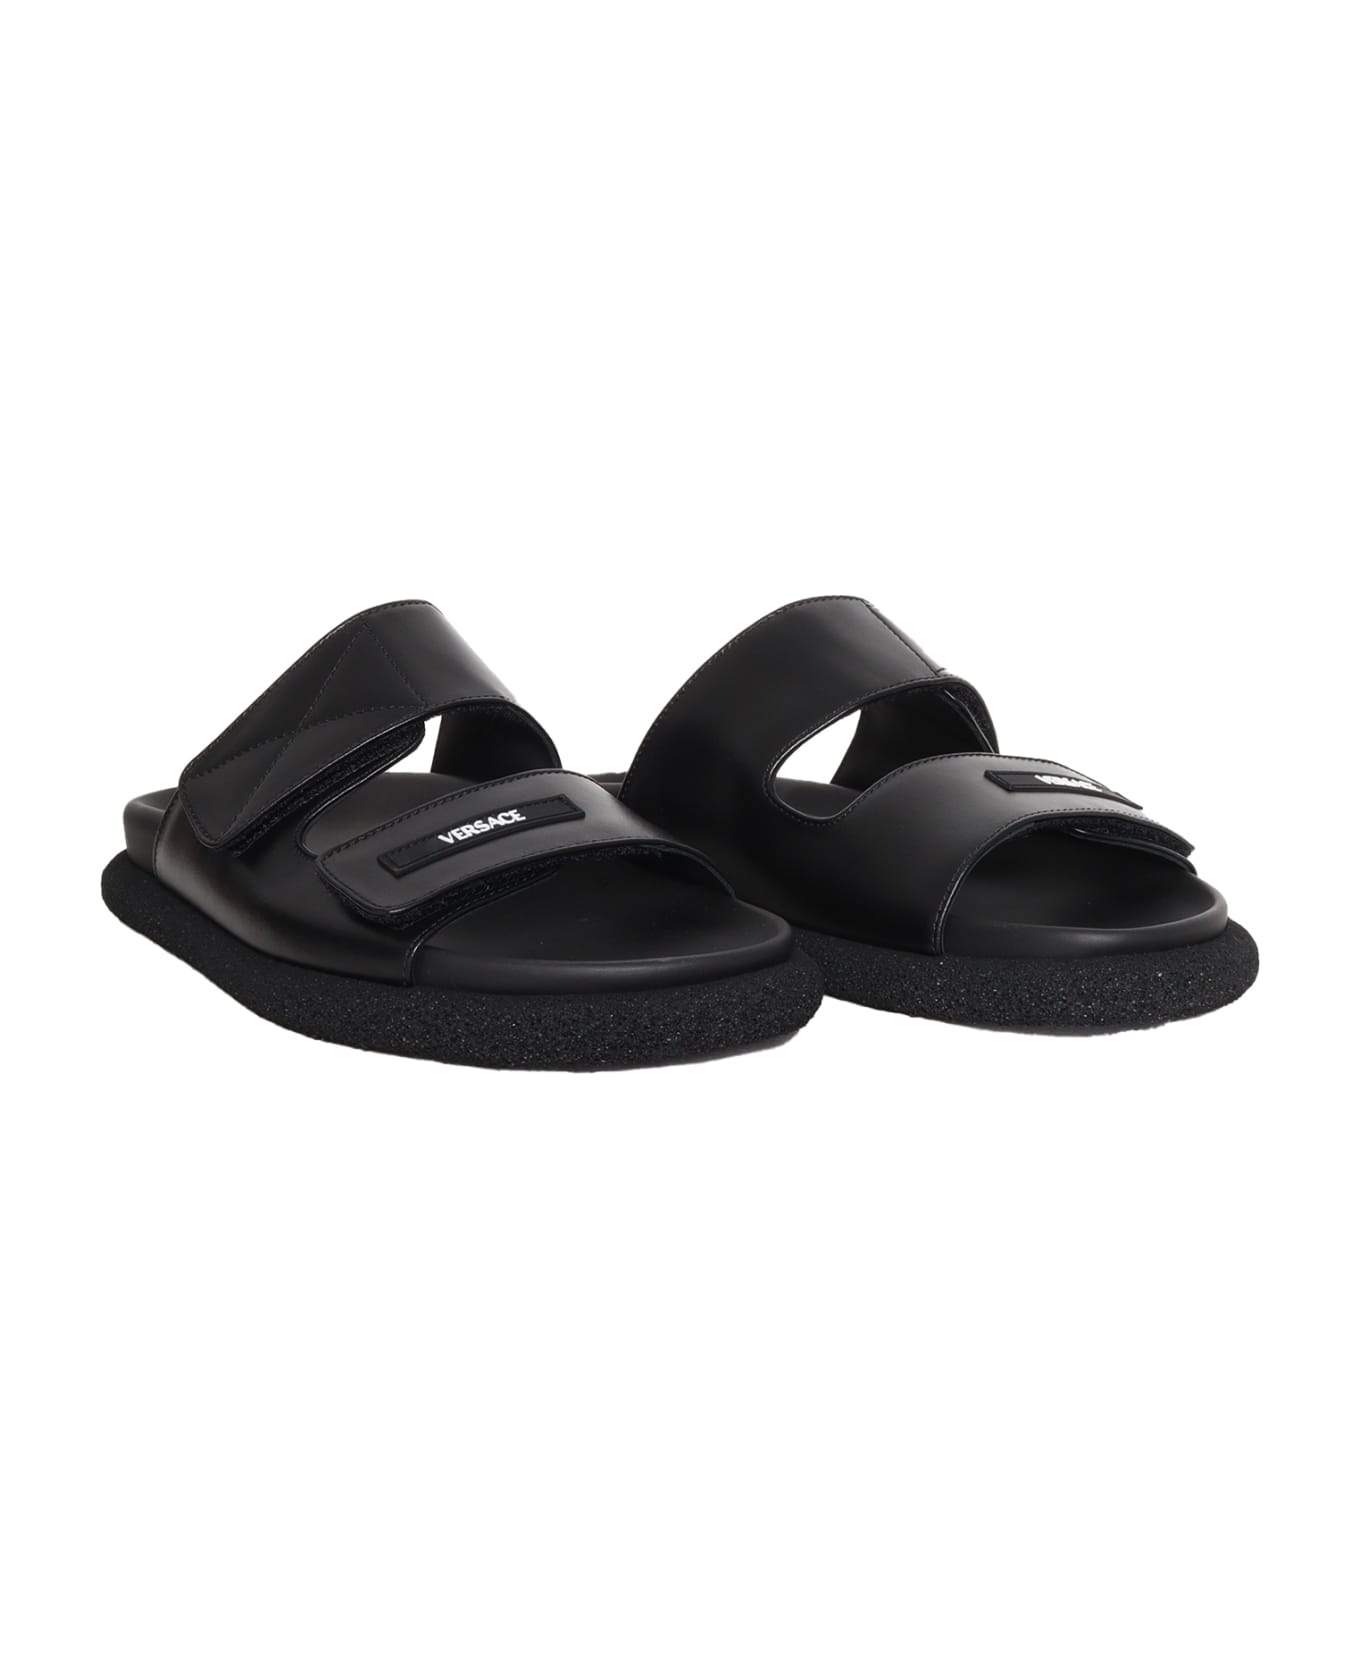 Versace Black Leather Slippers - BLACK